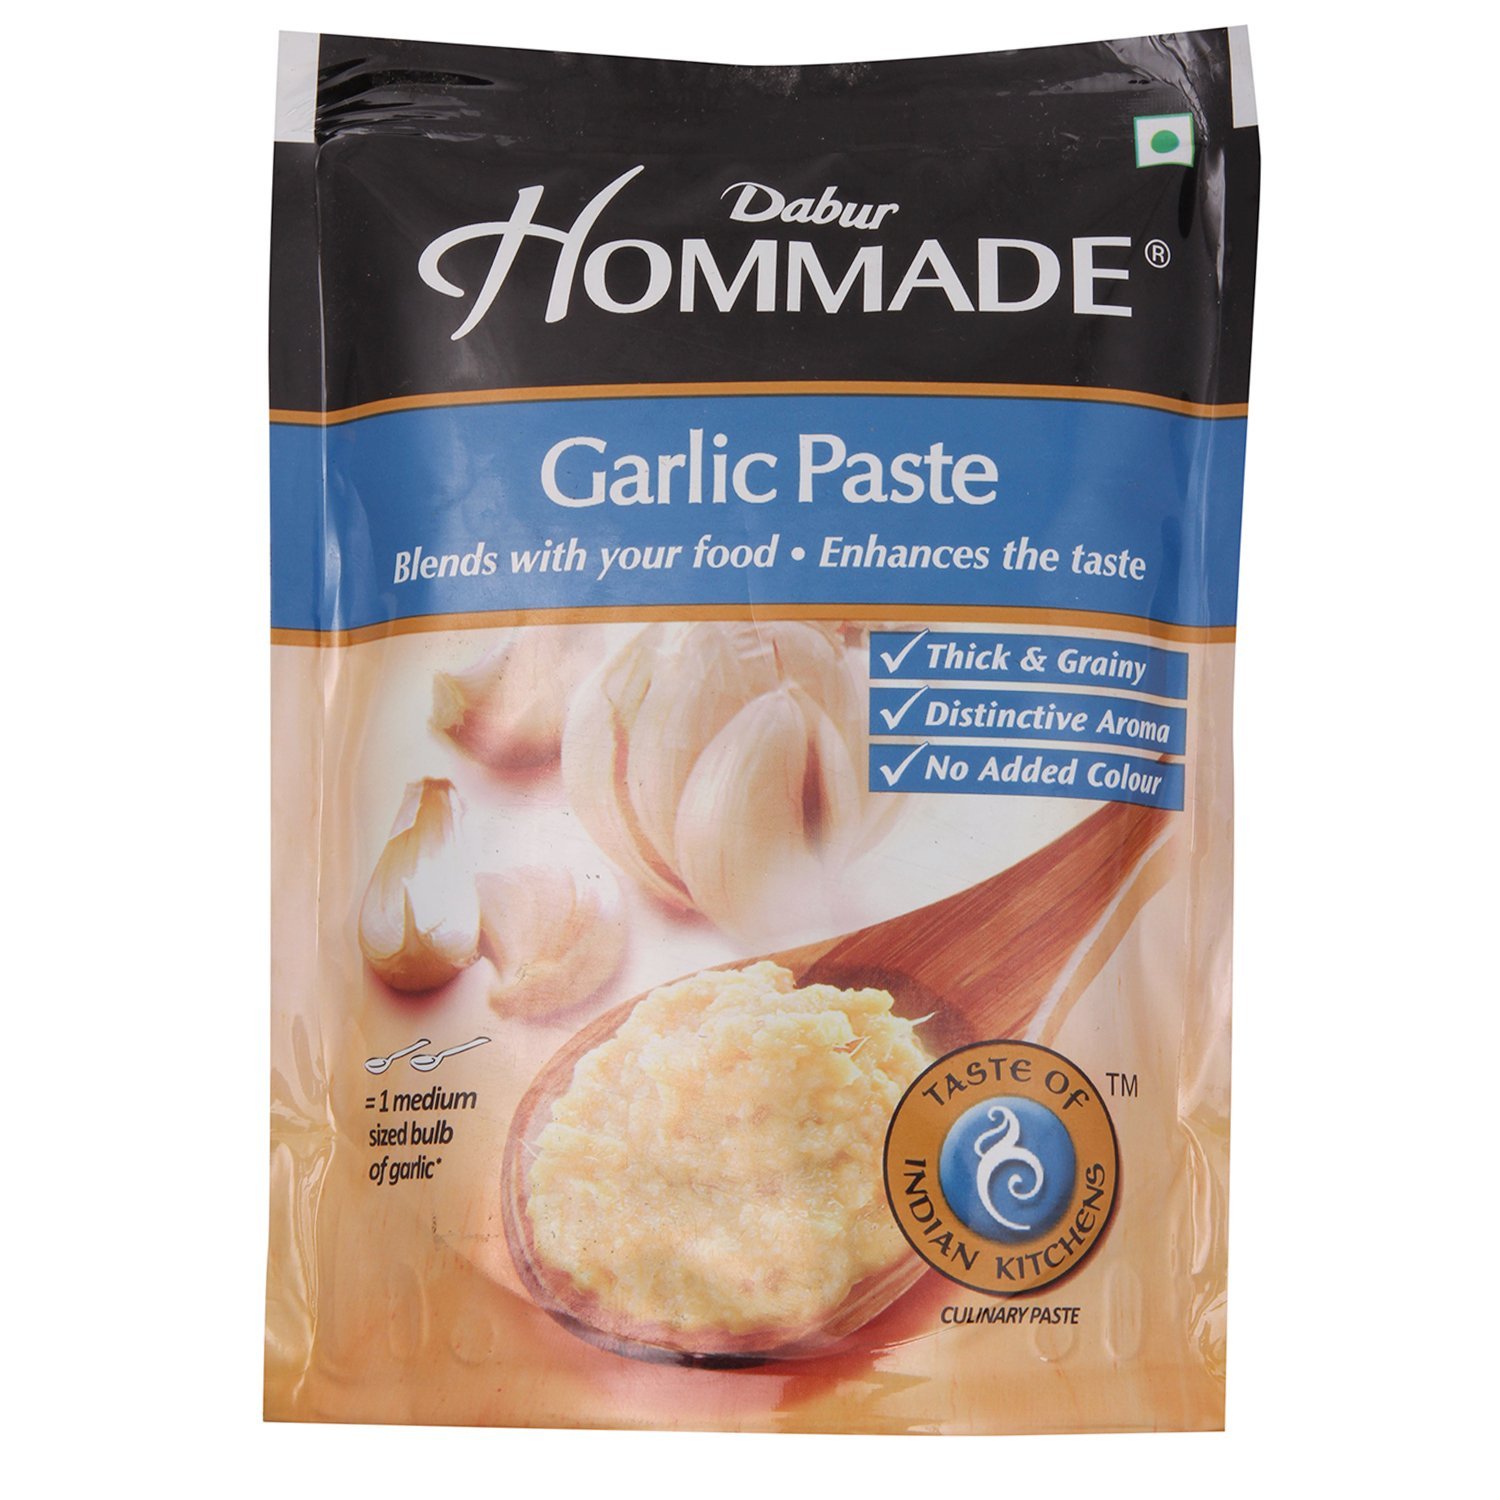 Dabur Hommade Garlic Paste Image